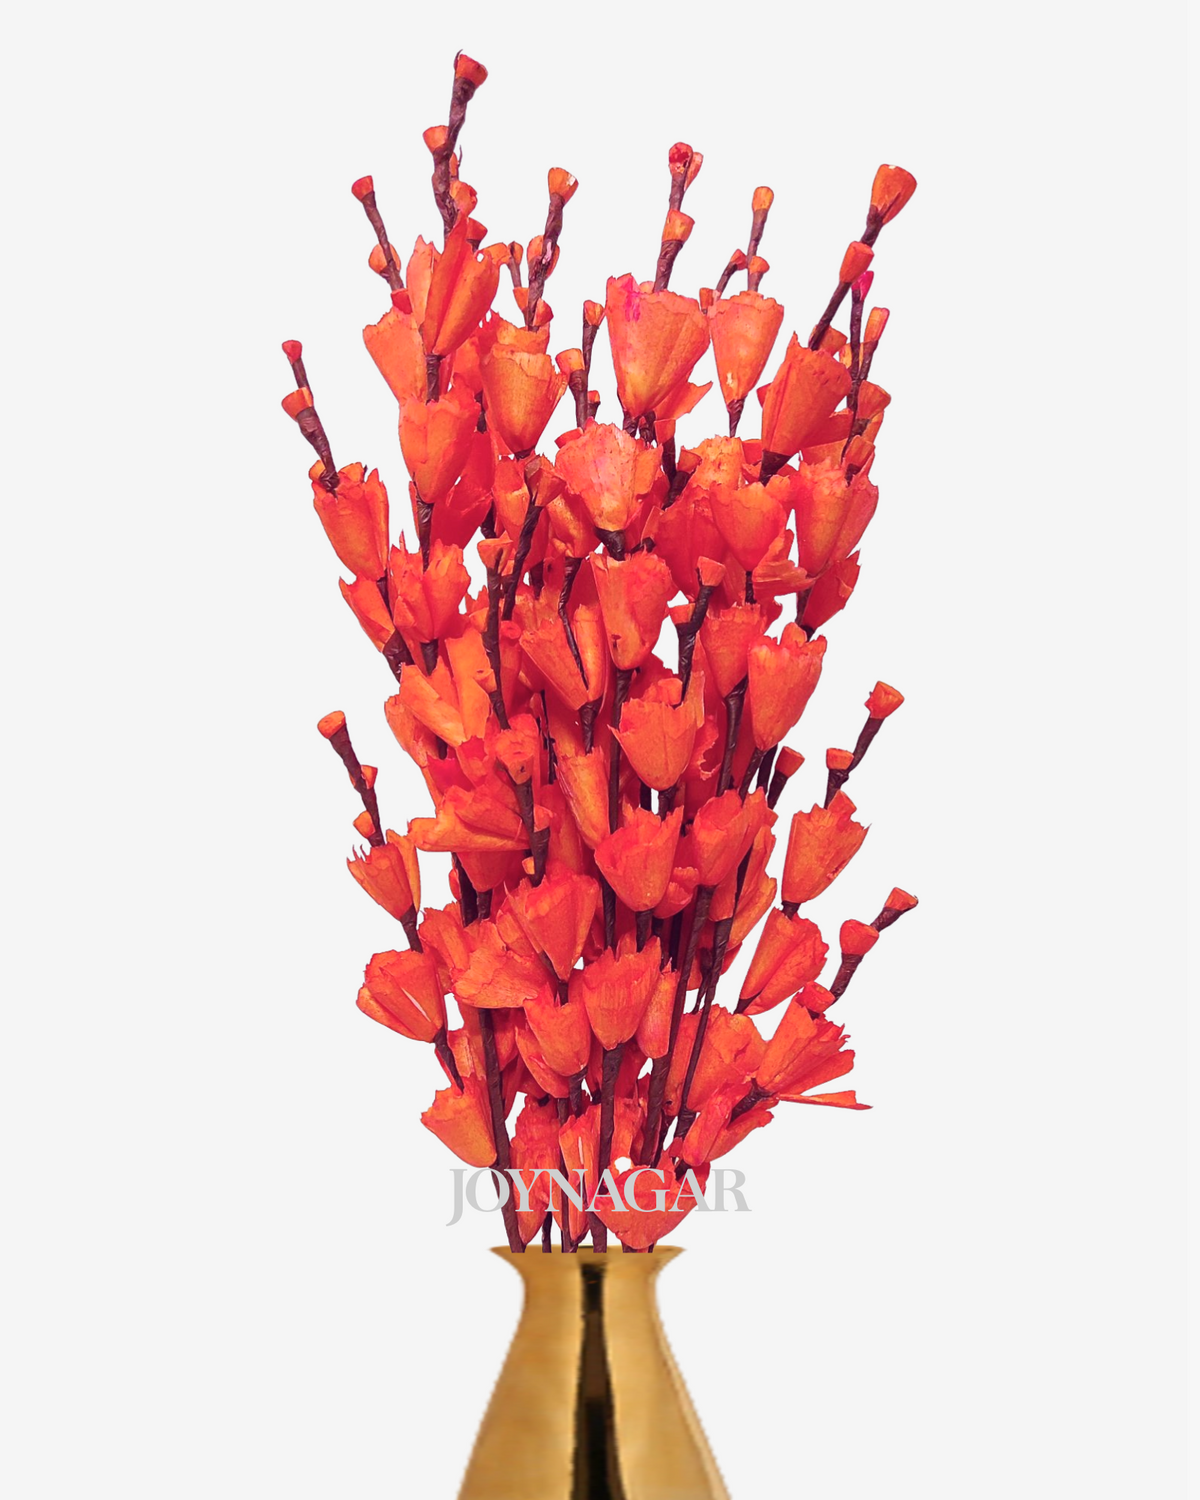 Sola Manella Buds Flower Stick Joynagar Handicraft Artificial Flowers color_orange